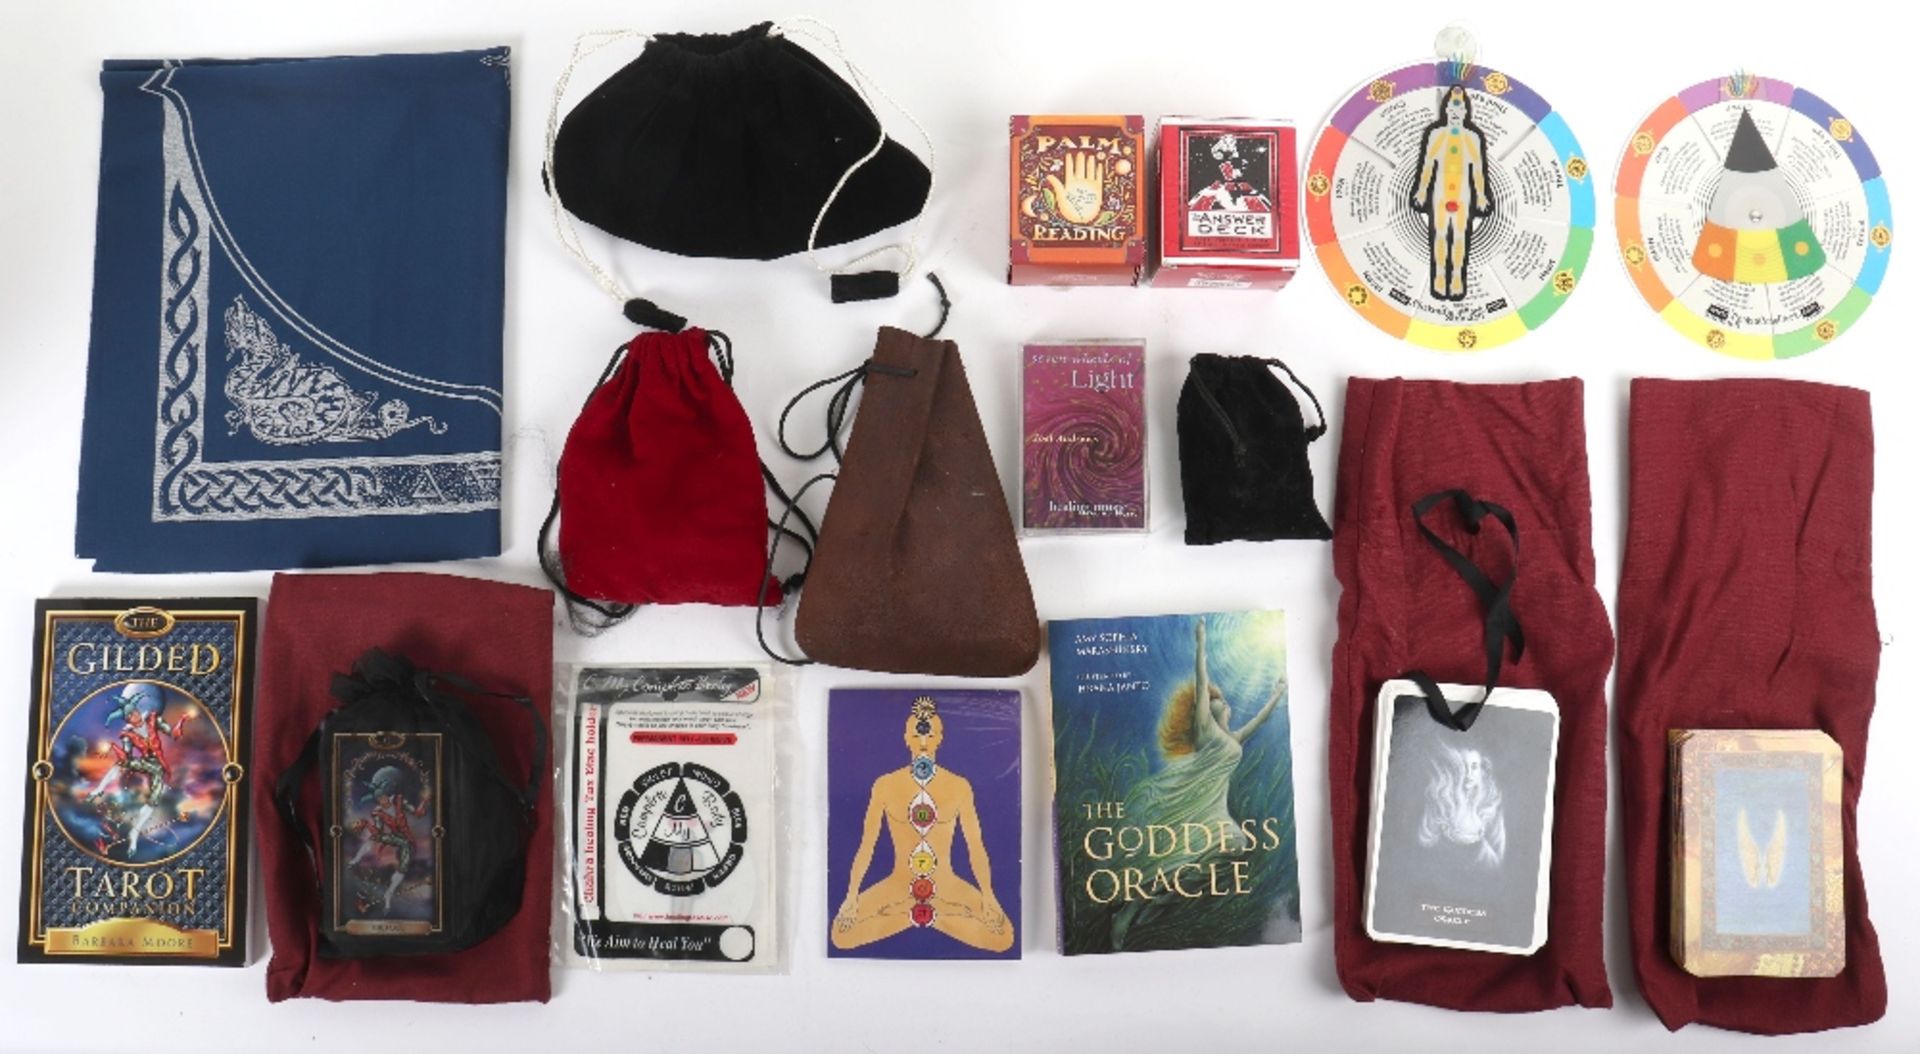 A selection of tarot cards and spiritual readings paraphernalia